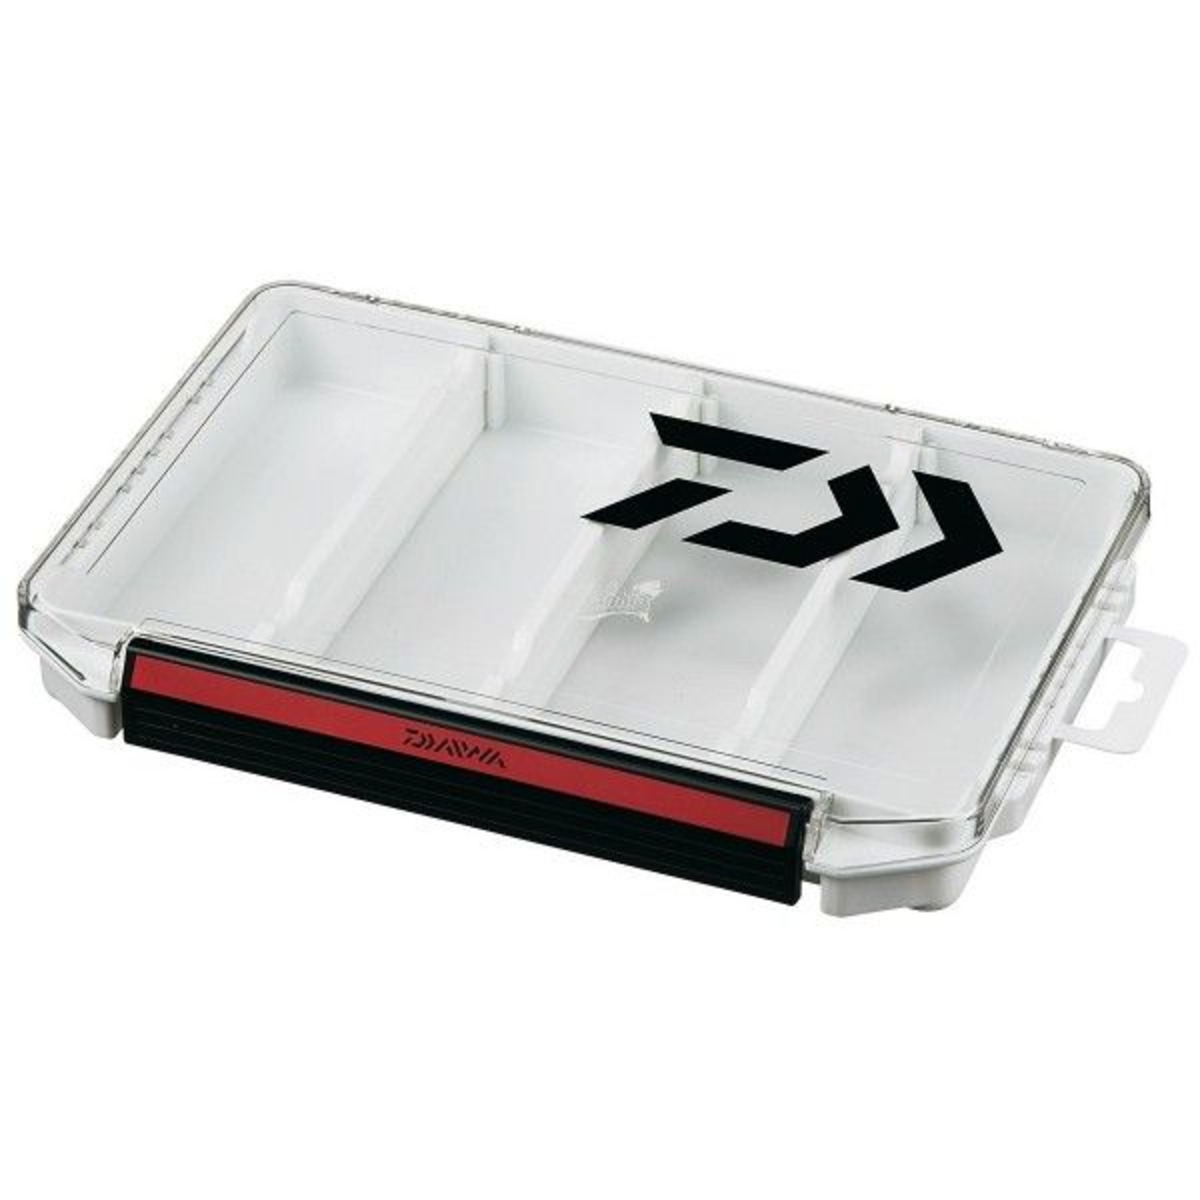 Daiwa Store Boxe -  White-Transparent - 4 Adjustable Compartments       